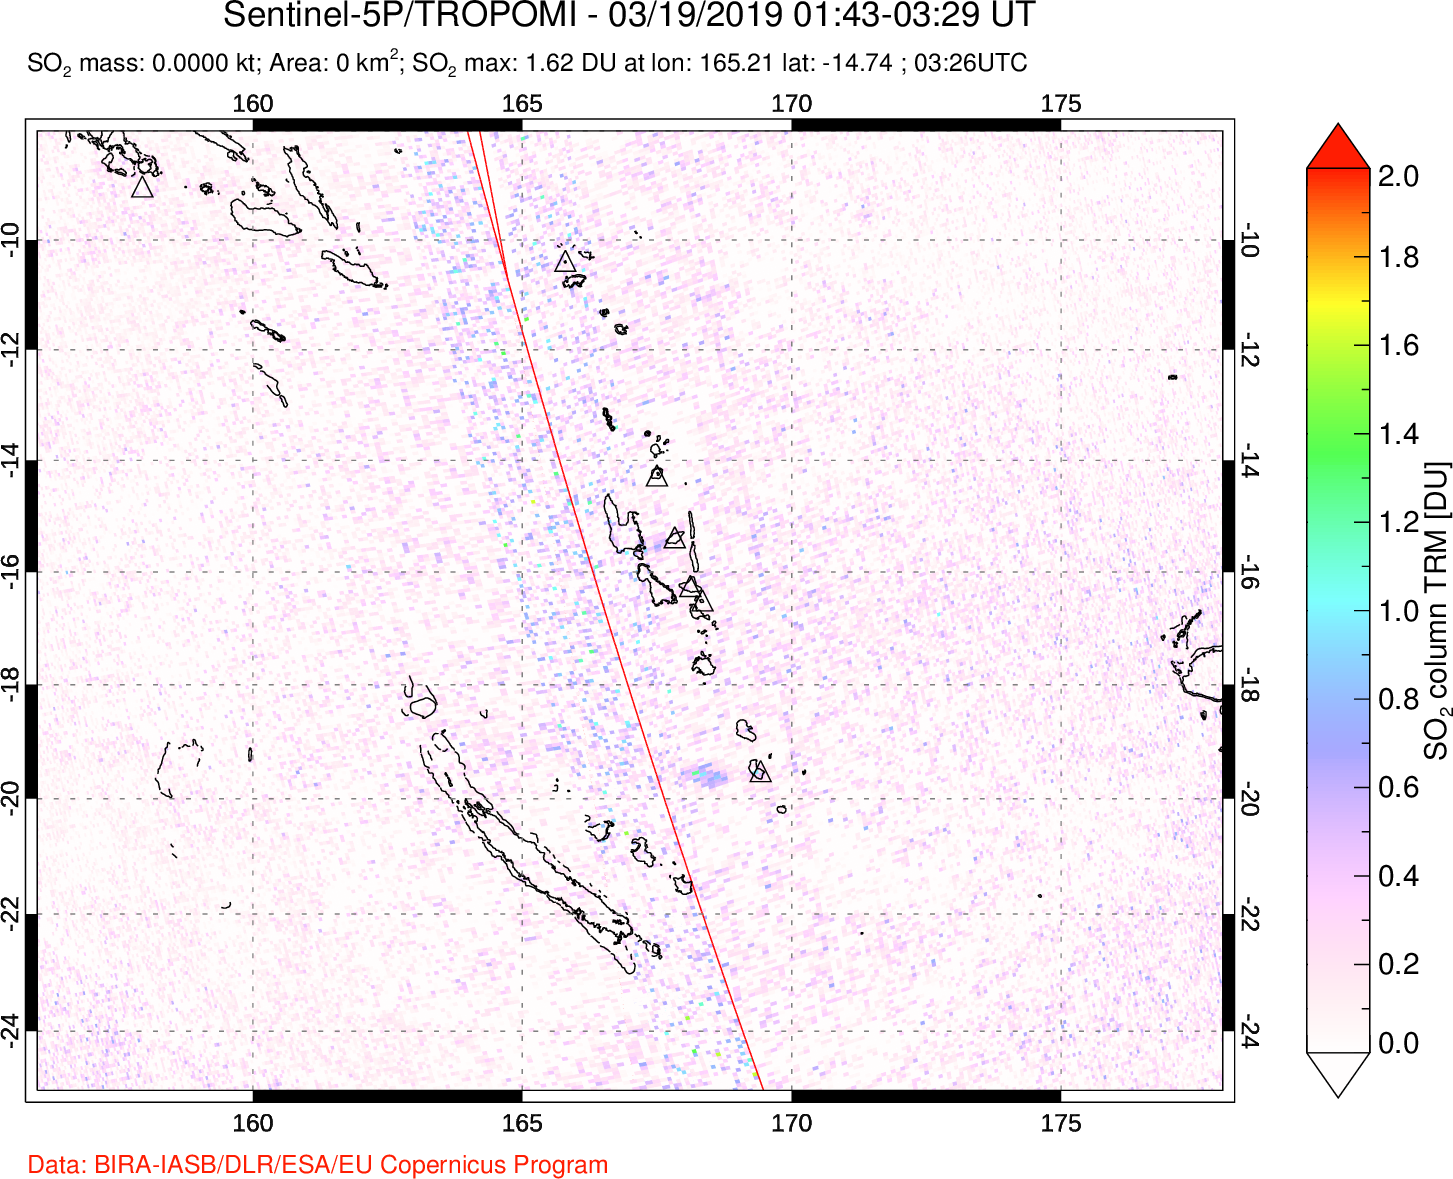 A sulfur dioxide image over Vanuatu, South Pacific on Mar 19, 2019.